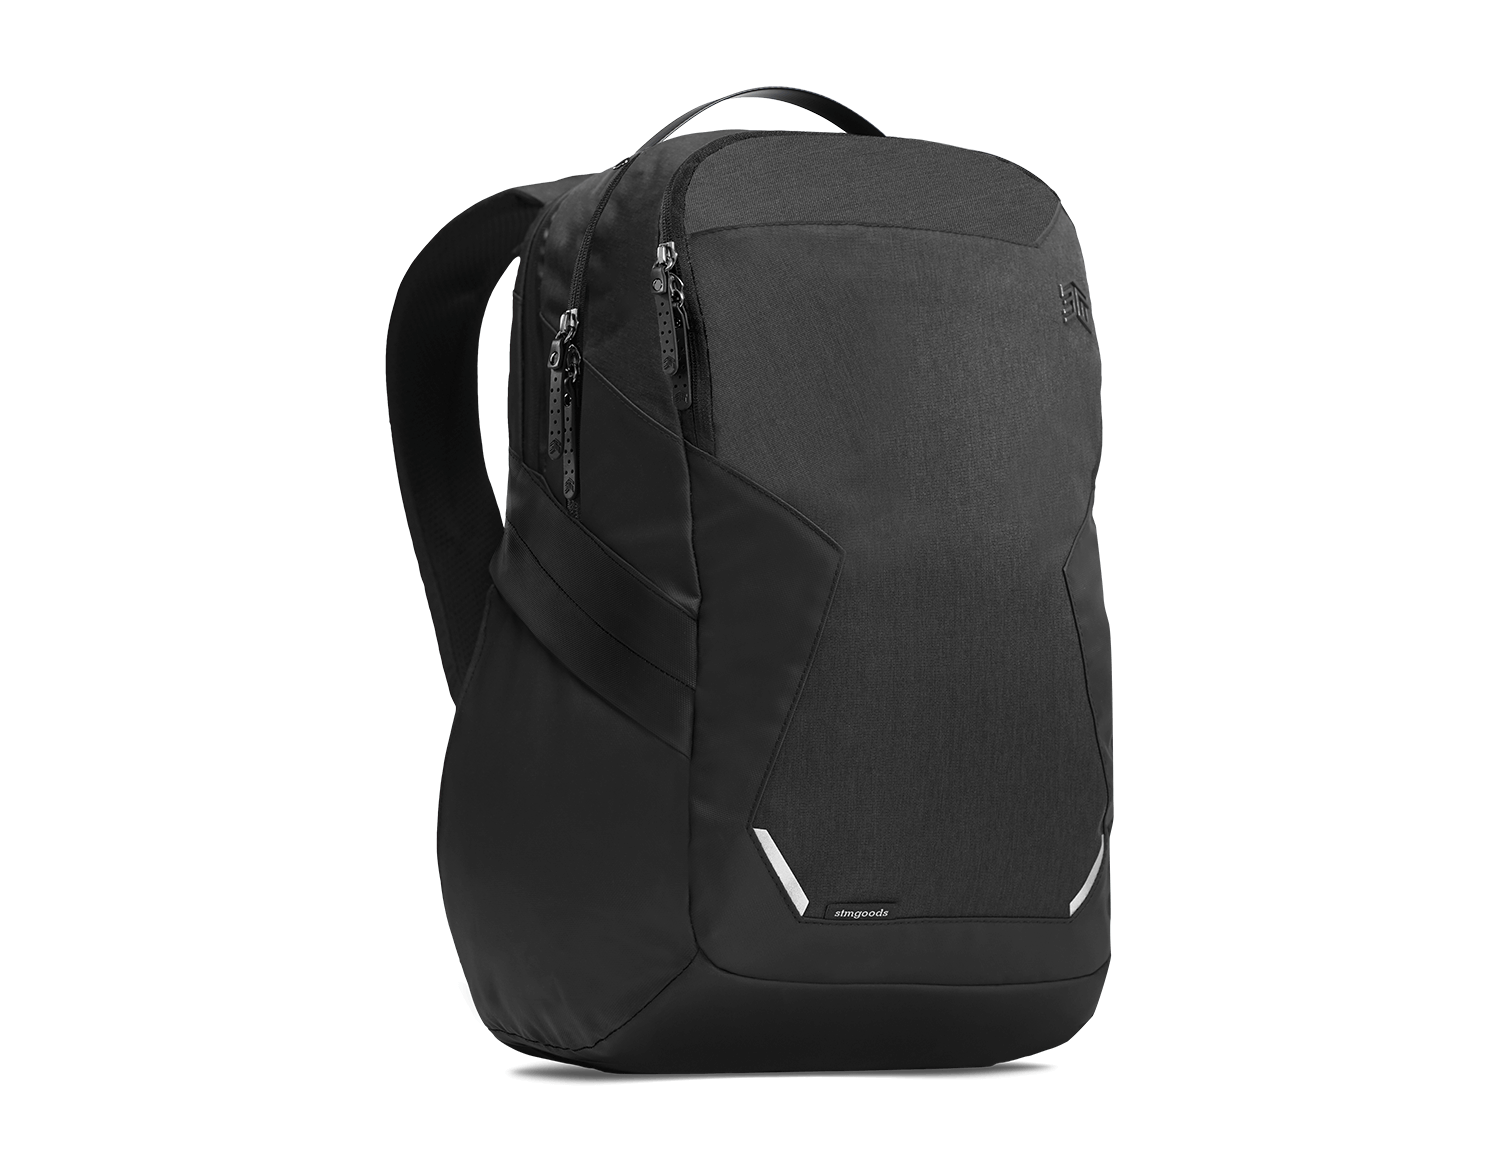 Myth Backpack 28L | STM Goods USA